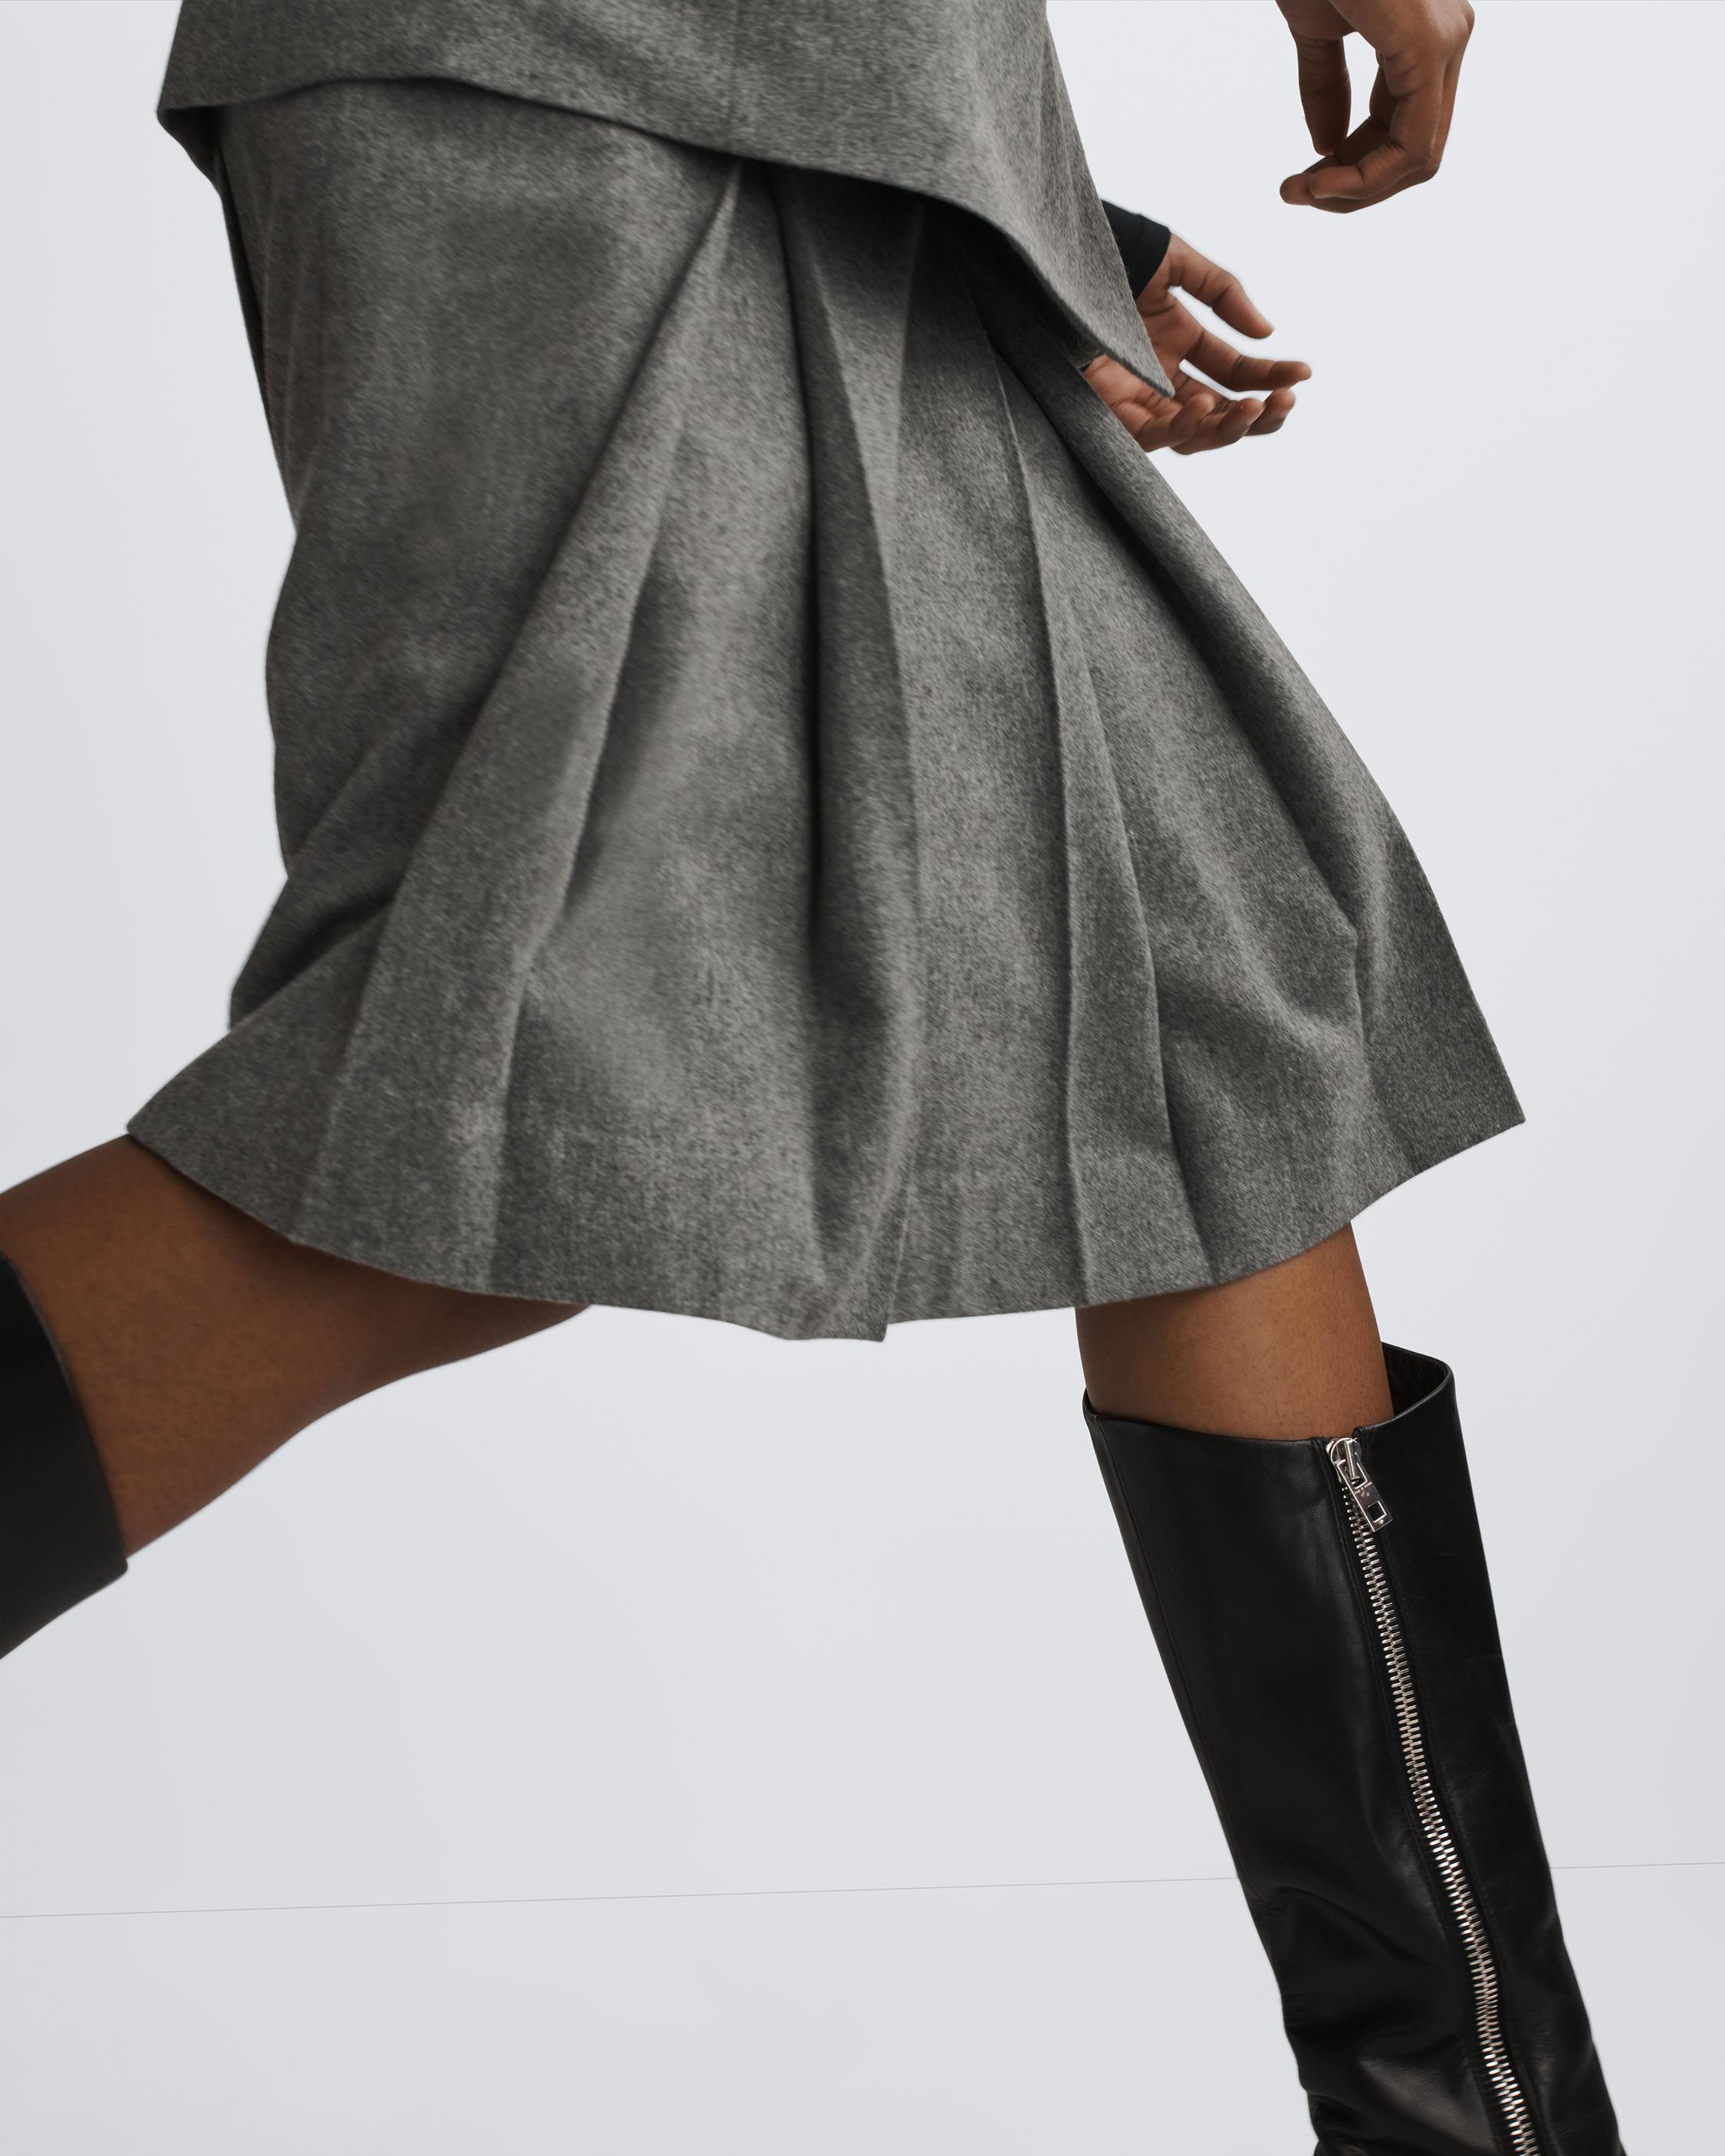 Garnet Italian Wool Skirt
Midi - 5